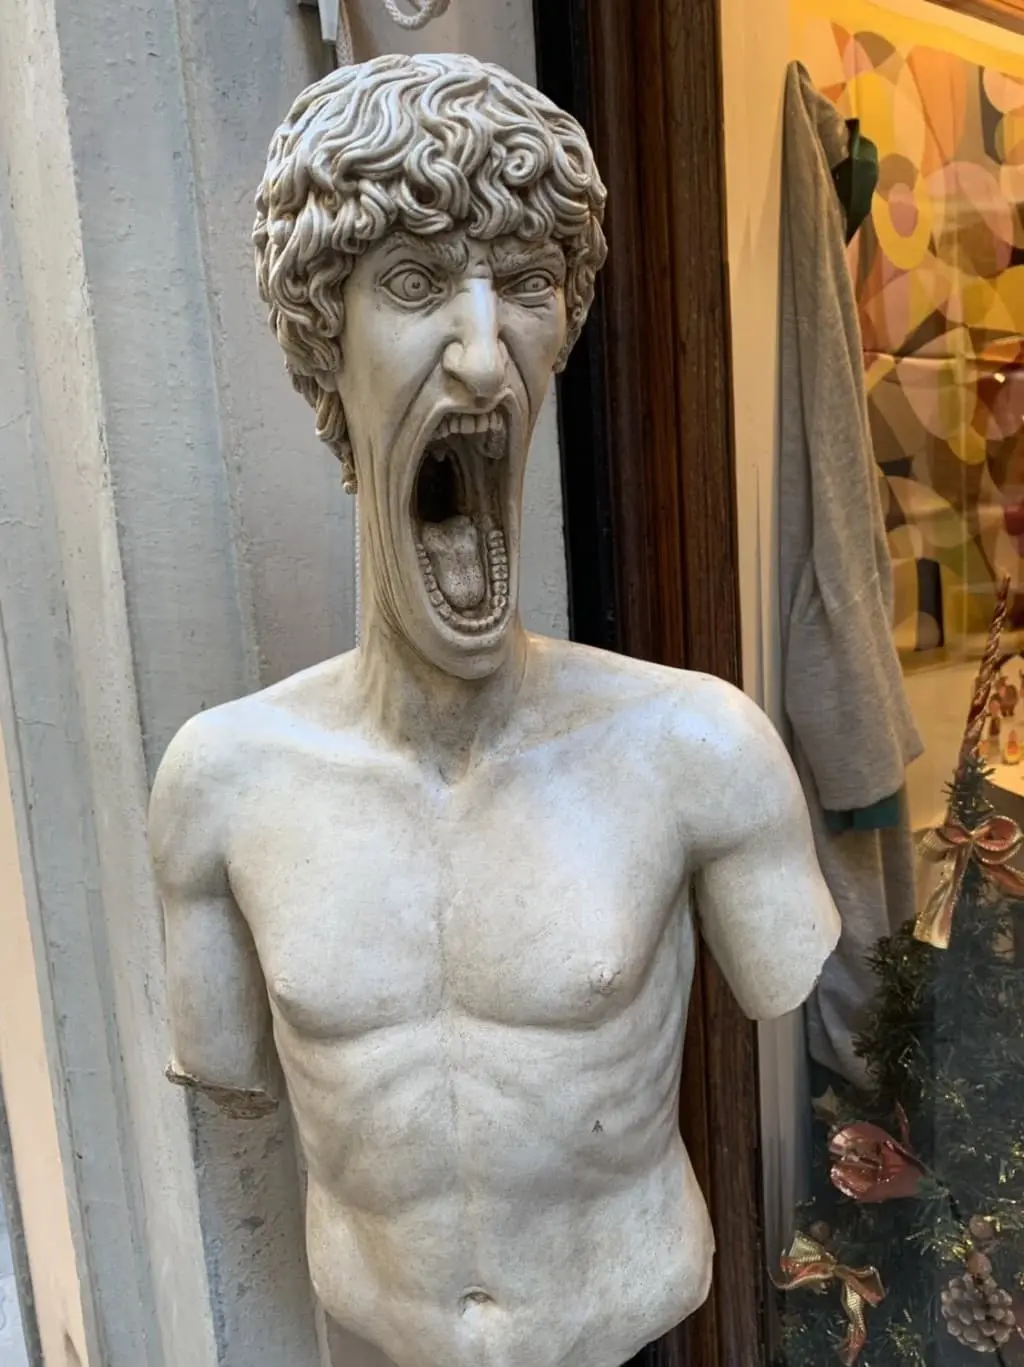 The David Screaming Sculpture